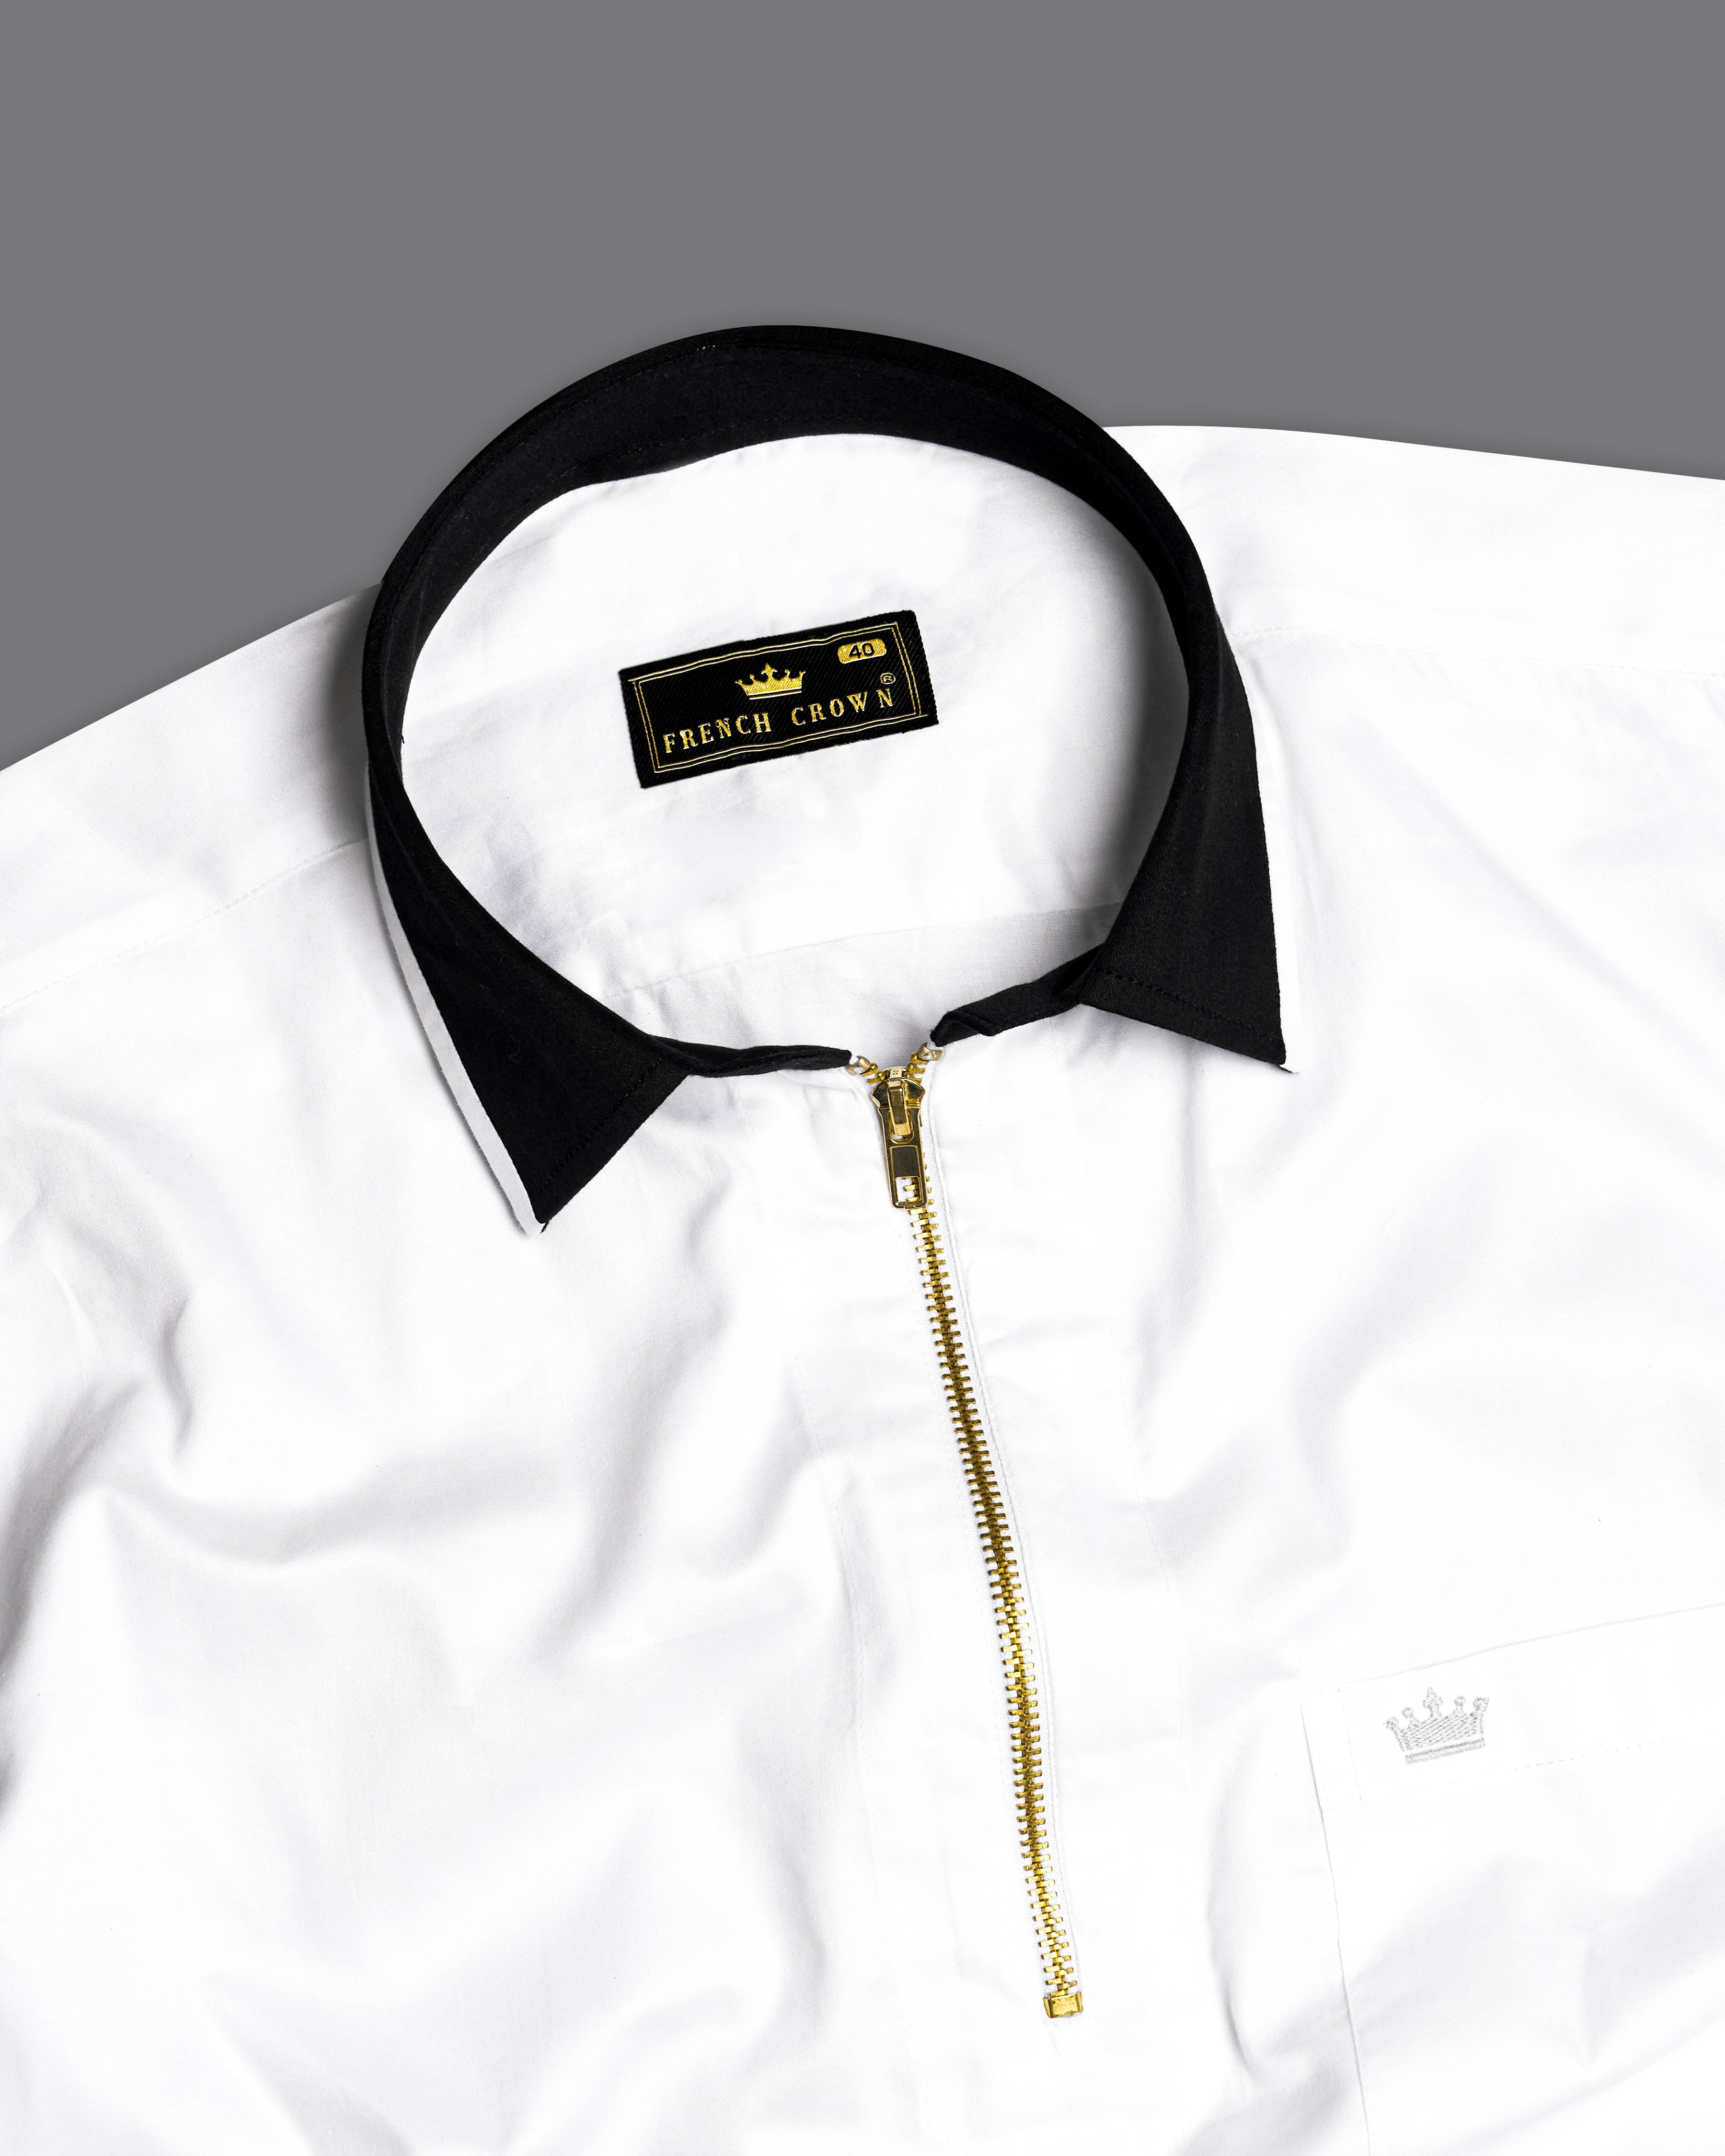 Bright White Super Soft Premium Cotton Designer Shirt with Black Collar and Cuffs 9730-BCC-ZP-P76-38, 9730-BCC-ZP-P76-H-38, 9730-BCC-ZP-P76-39, 9730-BCC-ZP-P76-H-39, 9730-BCC-ZP-P76-40, 9730-BCC-ZP-P76-H-40, 9730-BCC-ZP-P76-42, 9730-BCC-ZP-P76-H-42, 9730-BCC-ZP-P76-44, 9730-BCC-ZP-P76-H-44, 9730-BCC-ZP-P76-46, 9730-BCC-ZP-P76-H-46, 9730-BCC-ZP-P76-48, 9730-BCC-ZP-P76-H-48, 9730-BCC-ZP-P76-50, 9730-BCC-ZP-P76-H-50, 9730-BCC-ZP-P76-52, 9730-BCC-ZP-P76-H-52